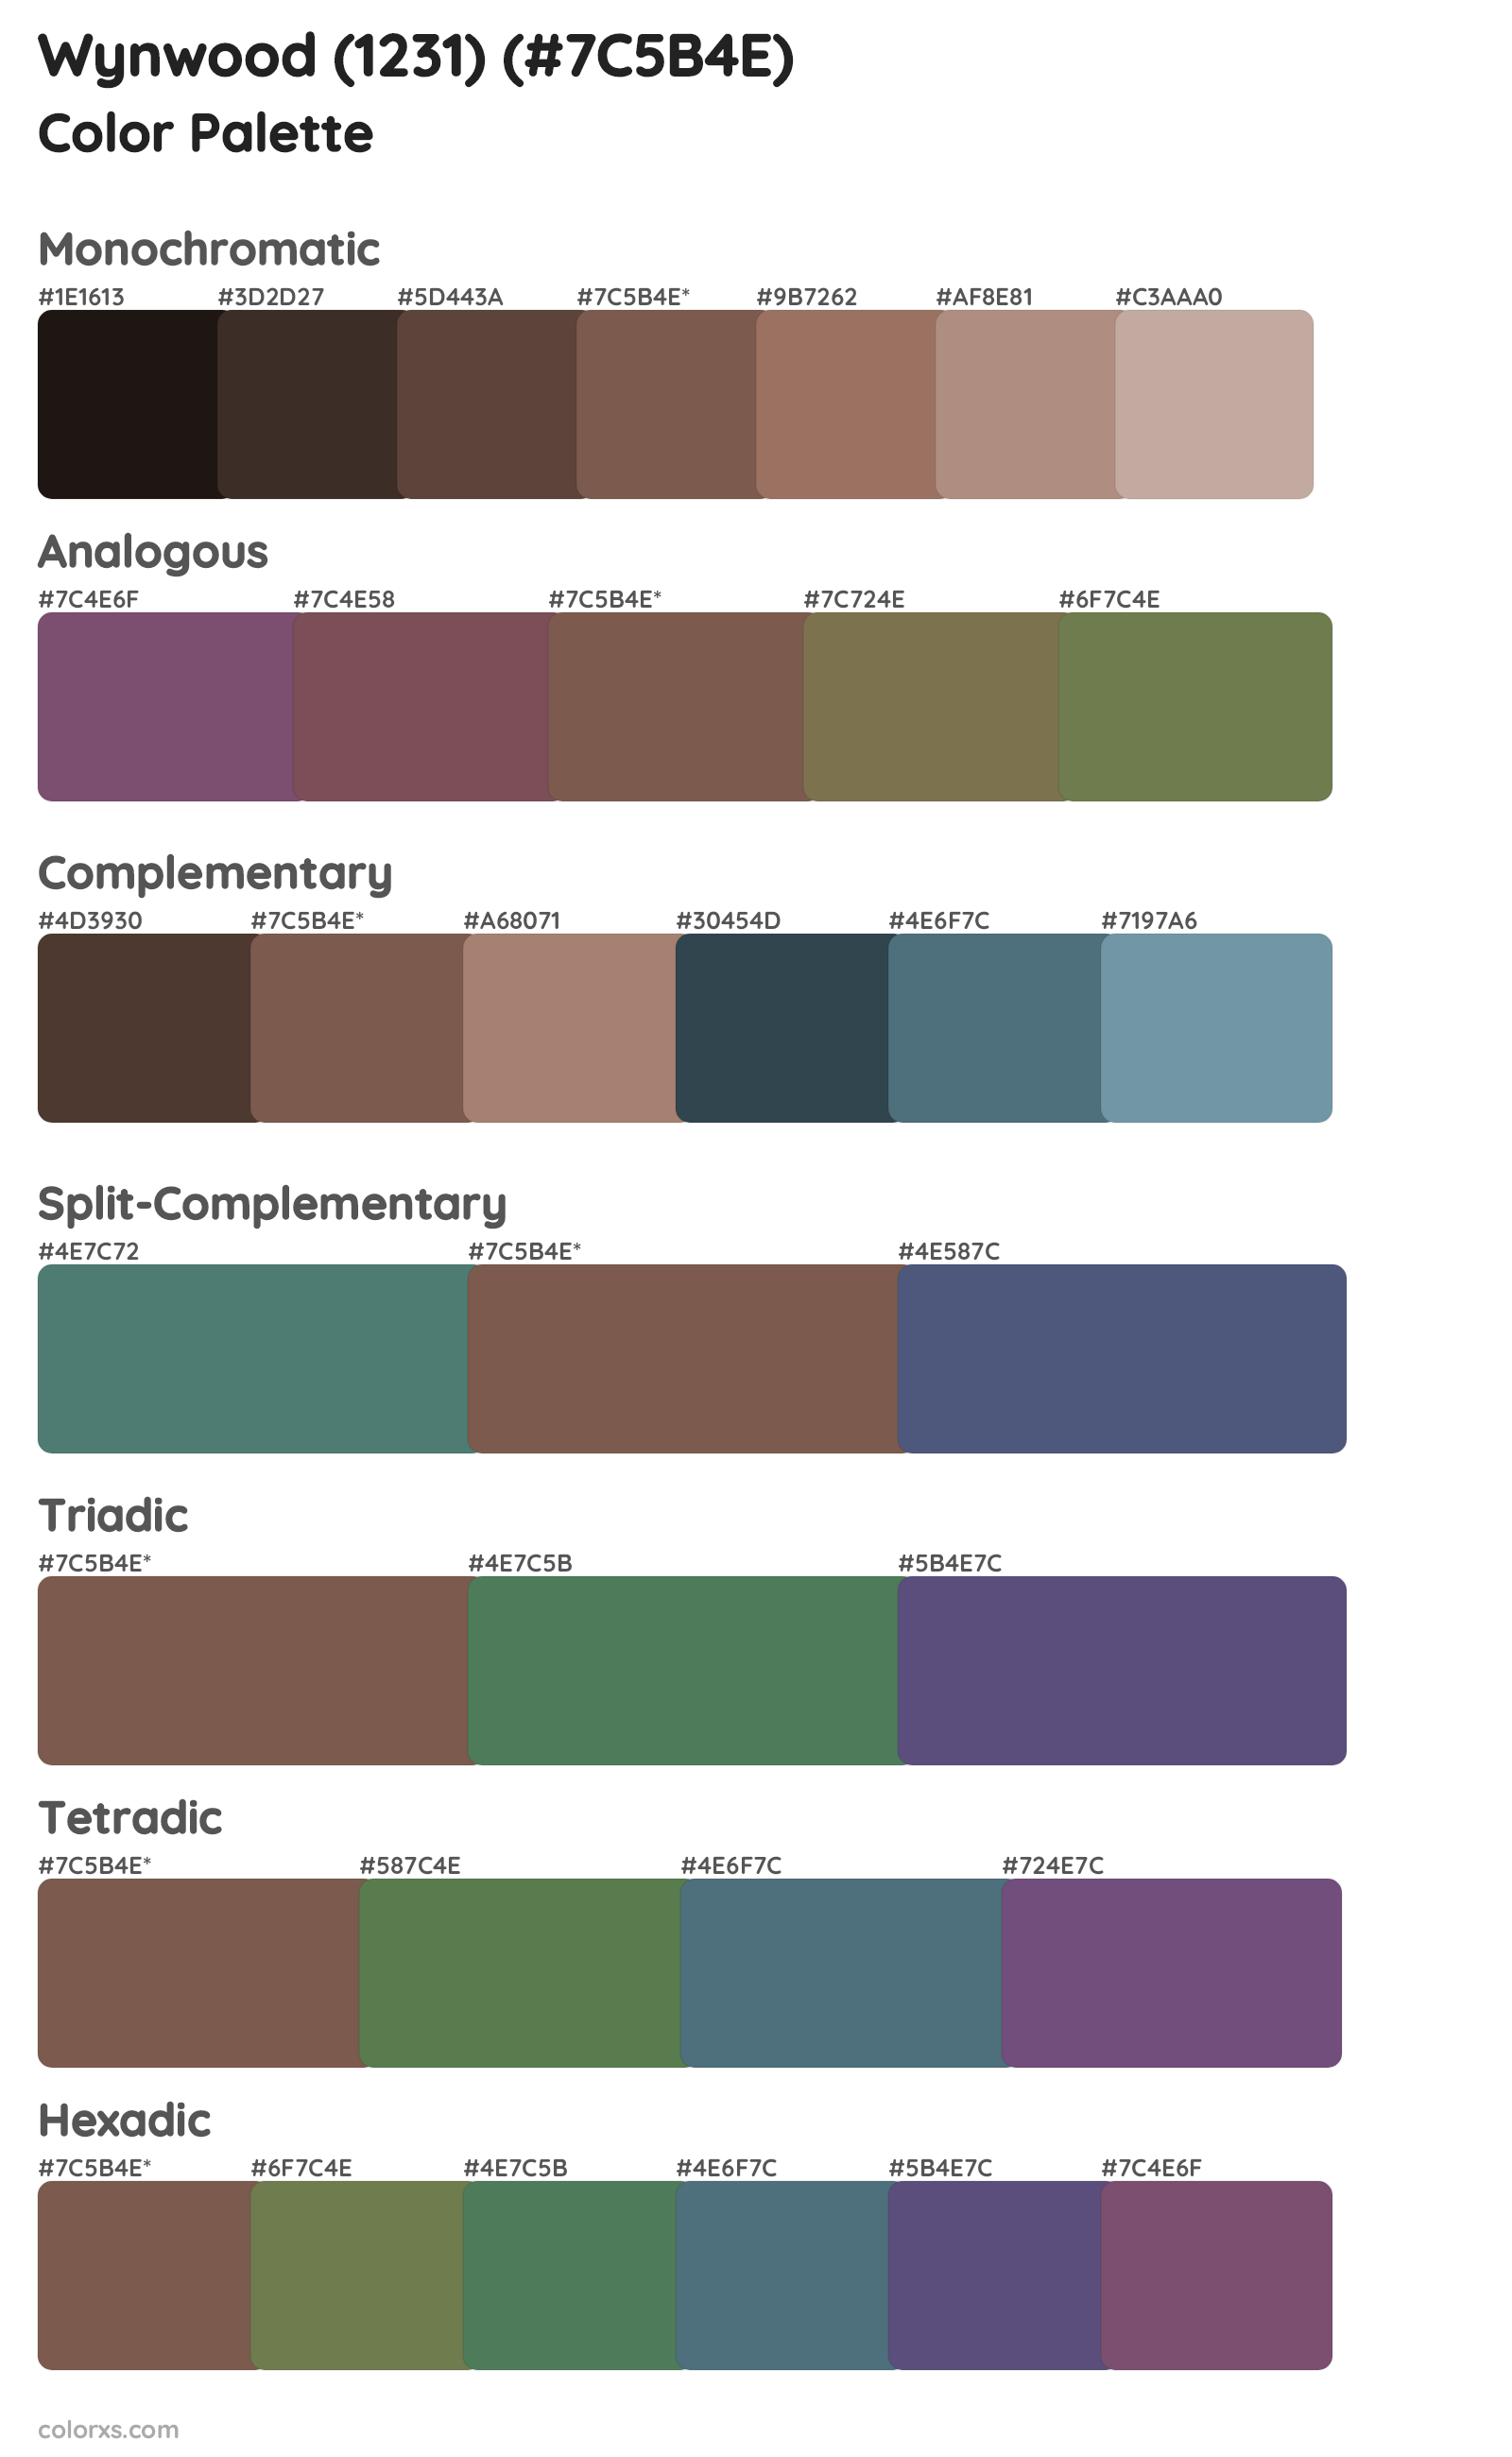 Wynwood (1231) Color Scheme Palettes